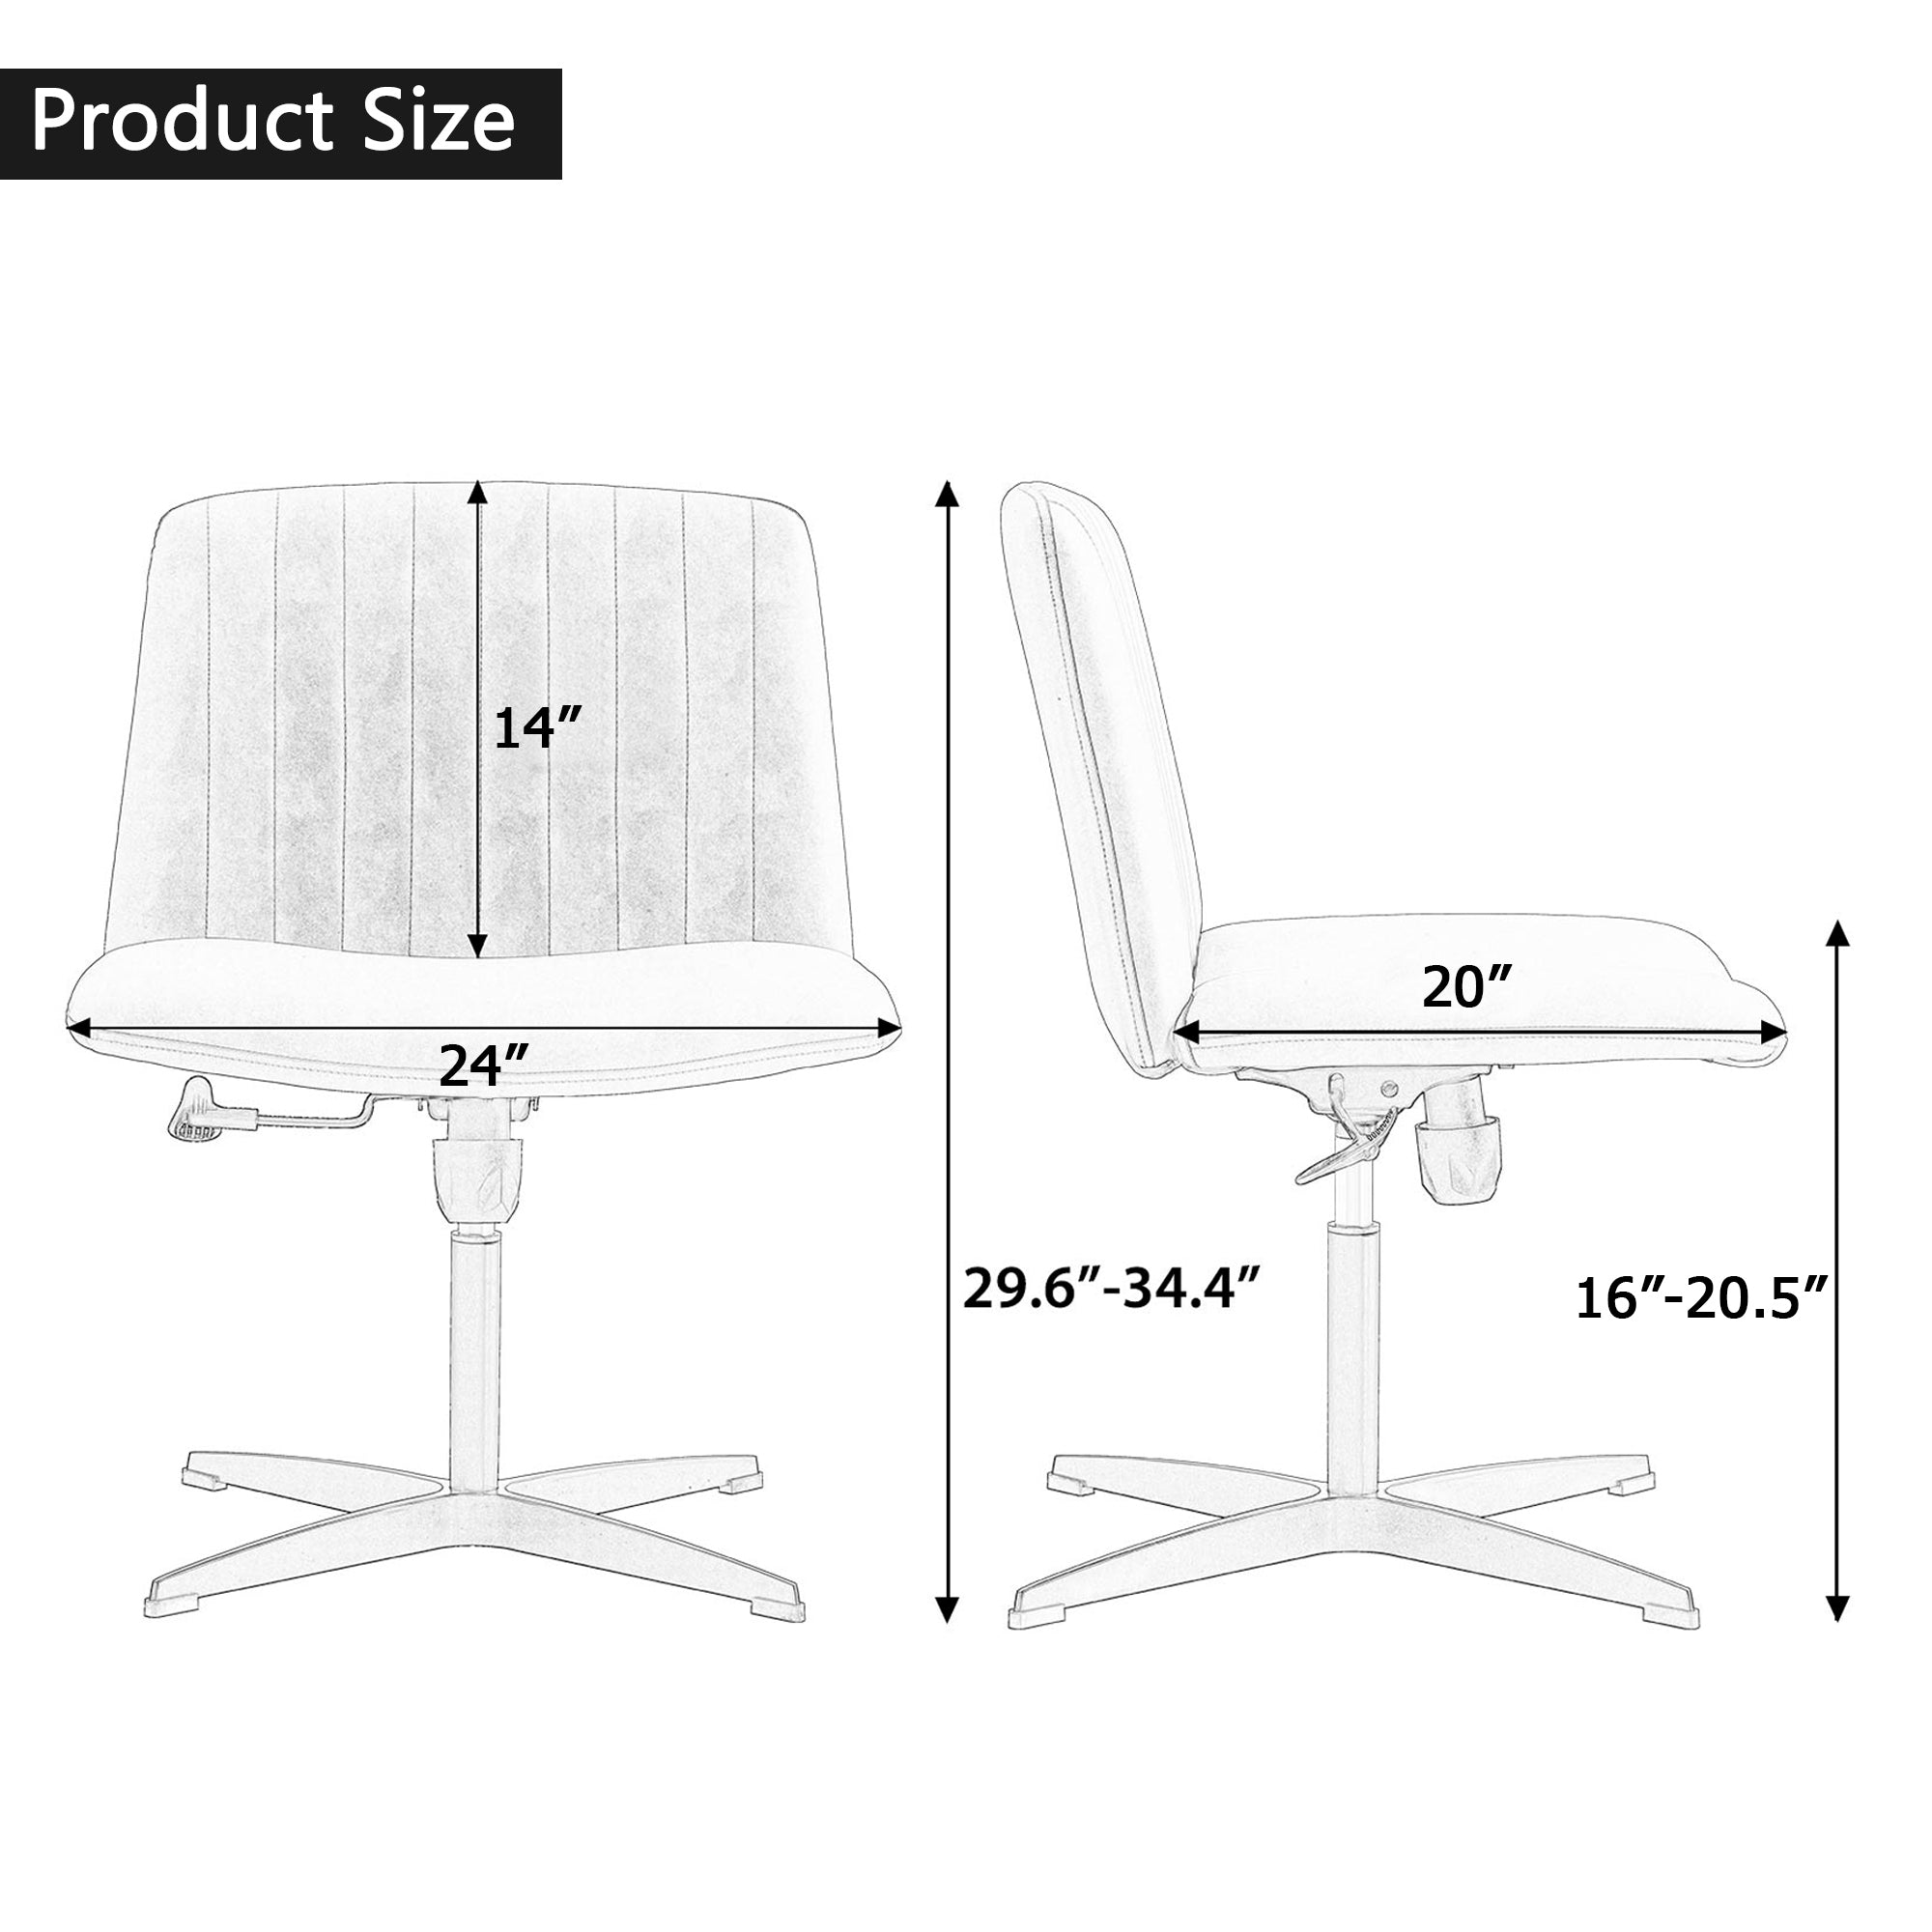 Chair Office Chair Adjustable 360 ° Swivel Cushion Chair - Linen Beige